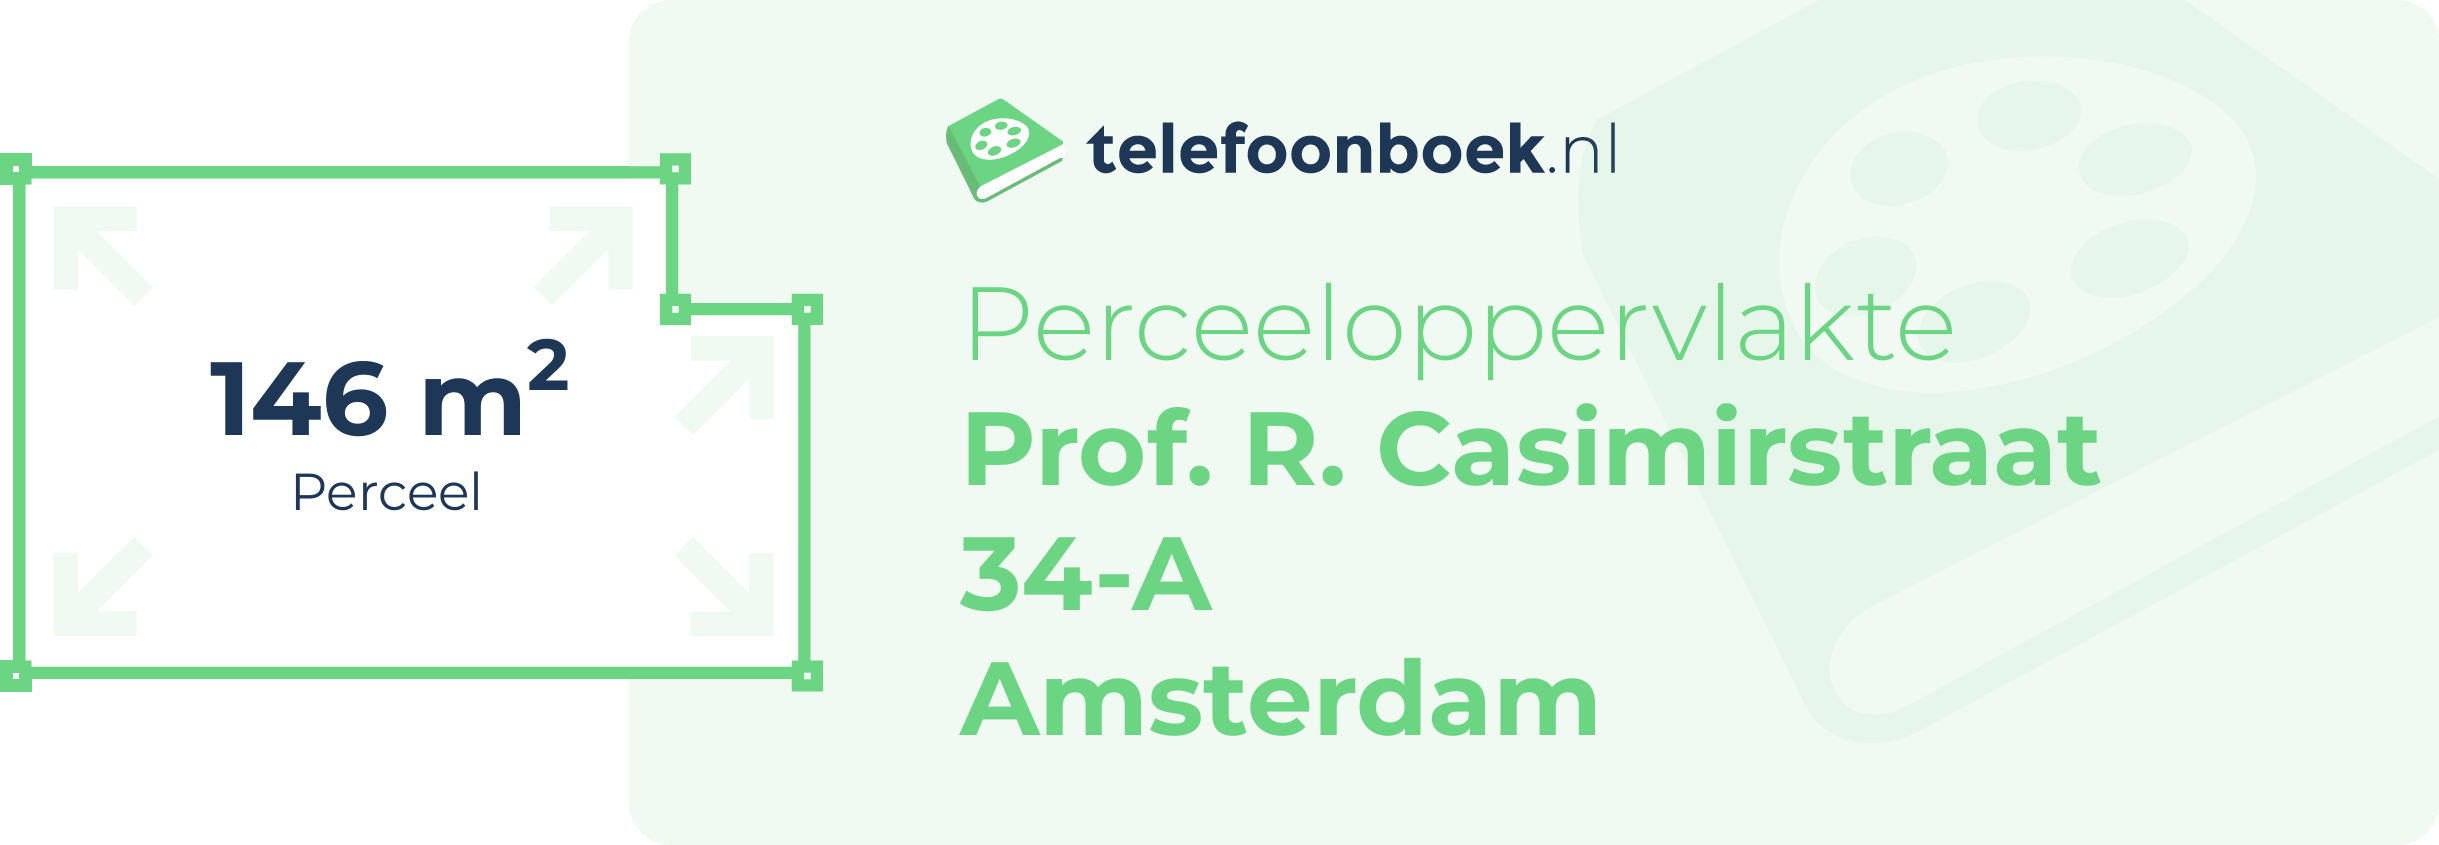 Perceeloppervlakte Prof. R. Casimirstraat 34-A Amsterdam